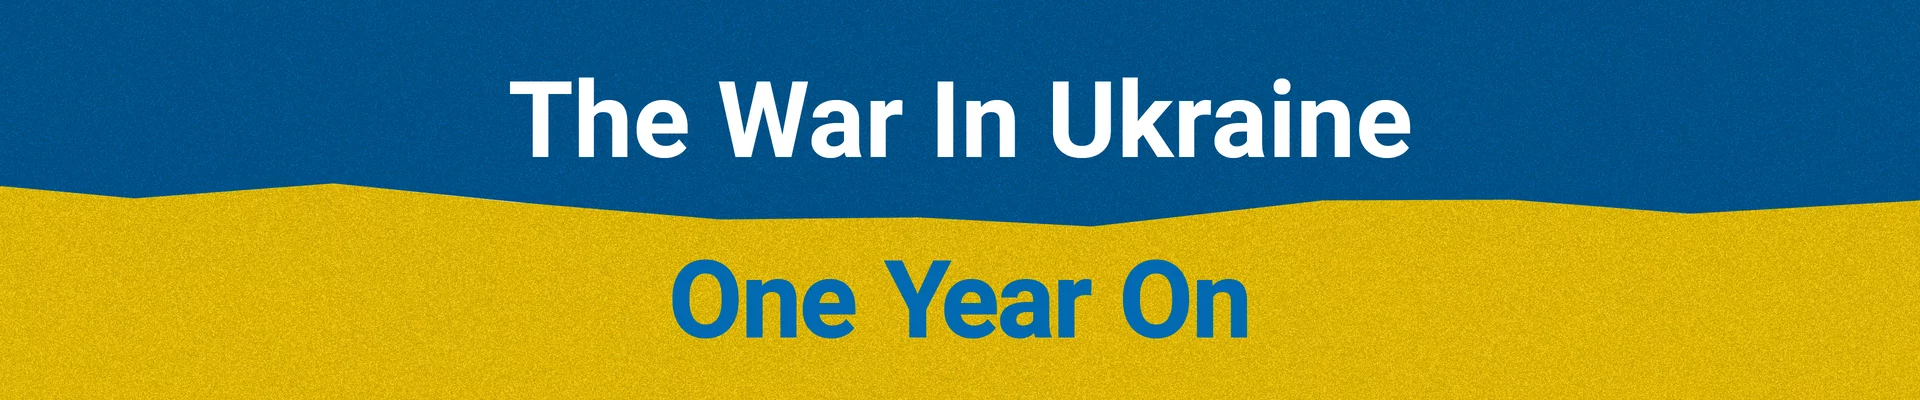 The war in Ukraine poster